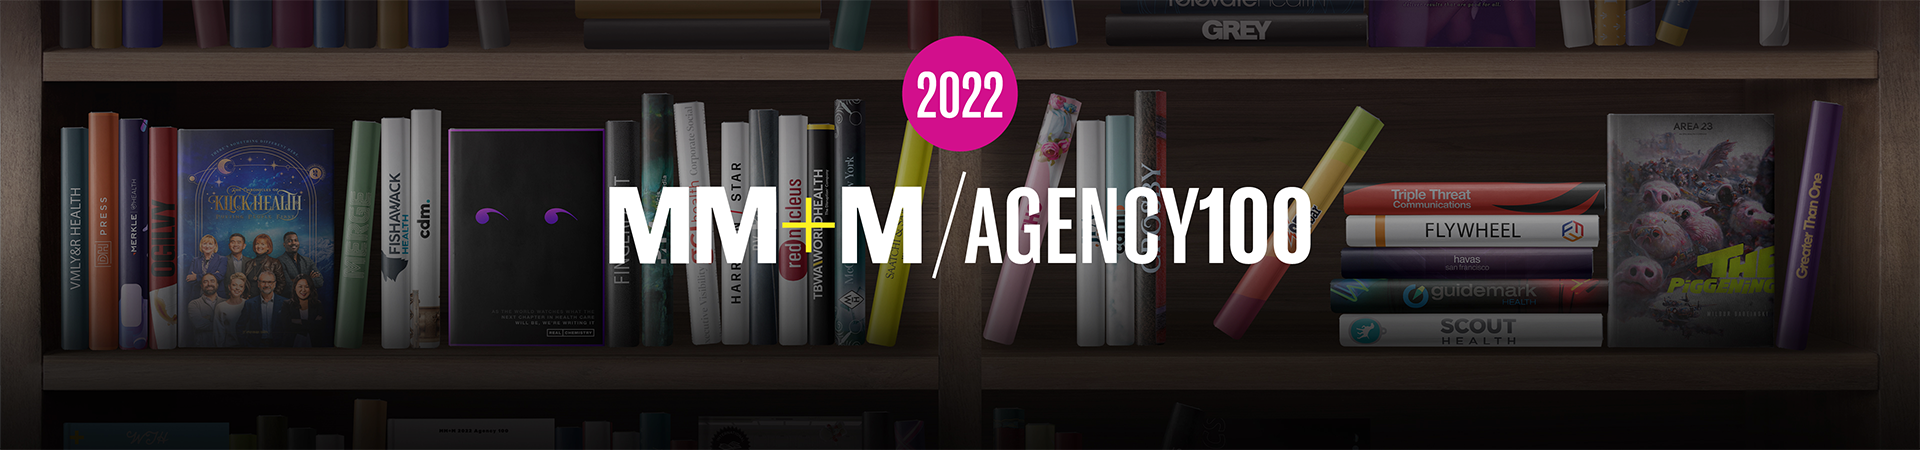 MM+M Agency100 Banner